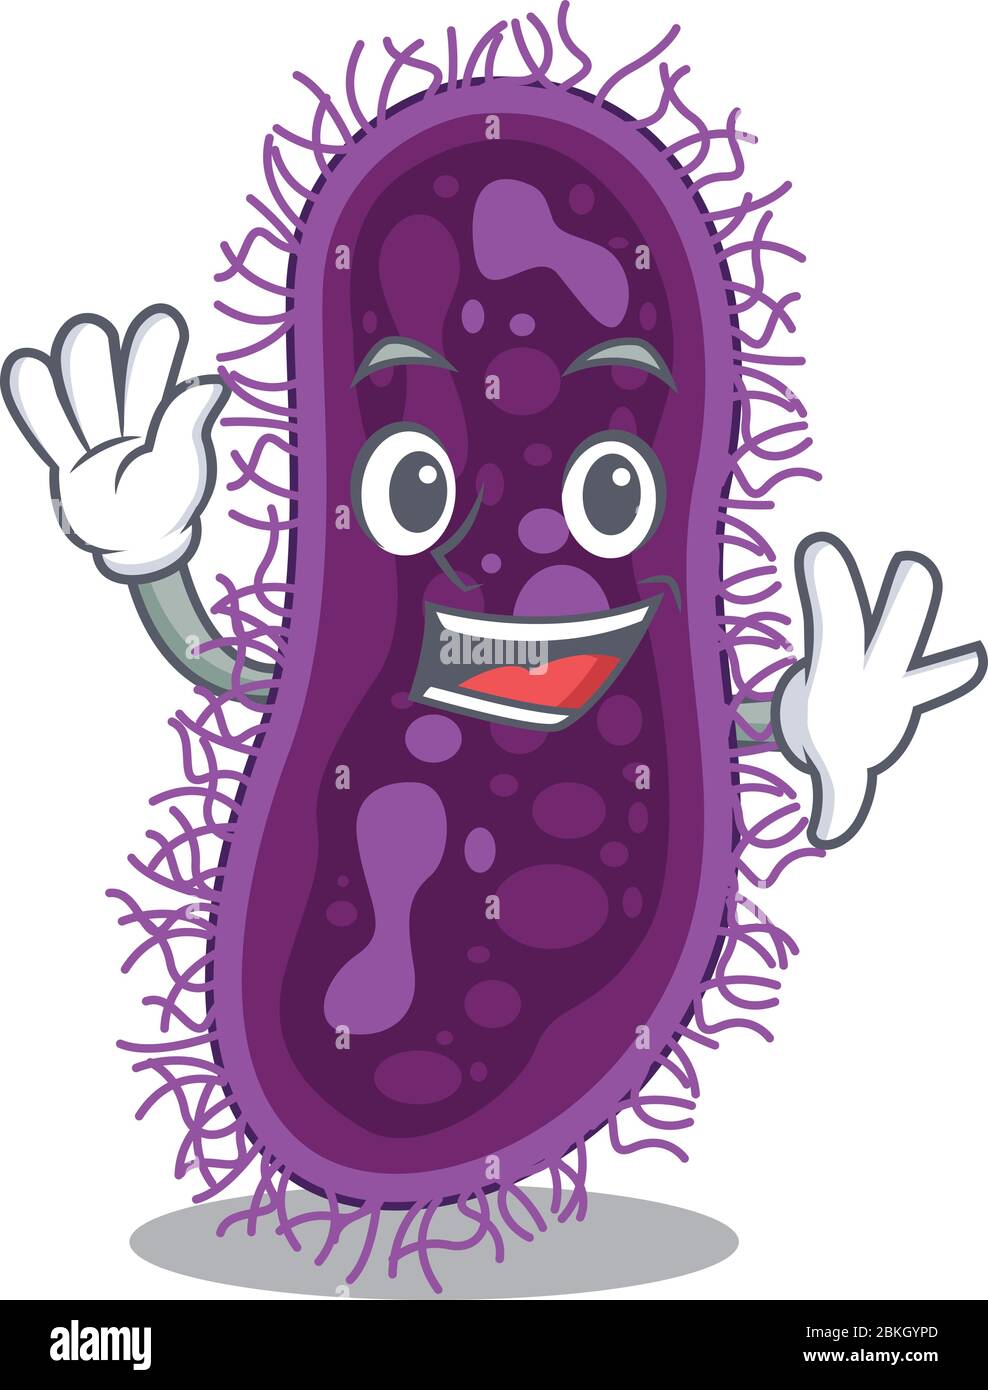 A charismatic lactobacillus rhamnosus bacteria mascot design style ...